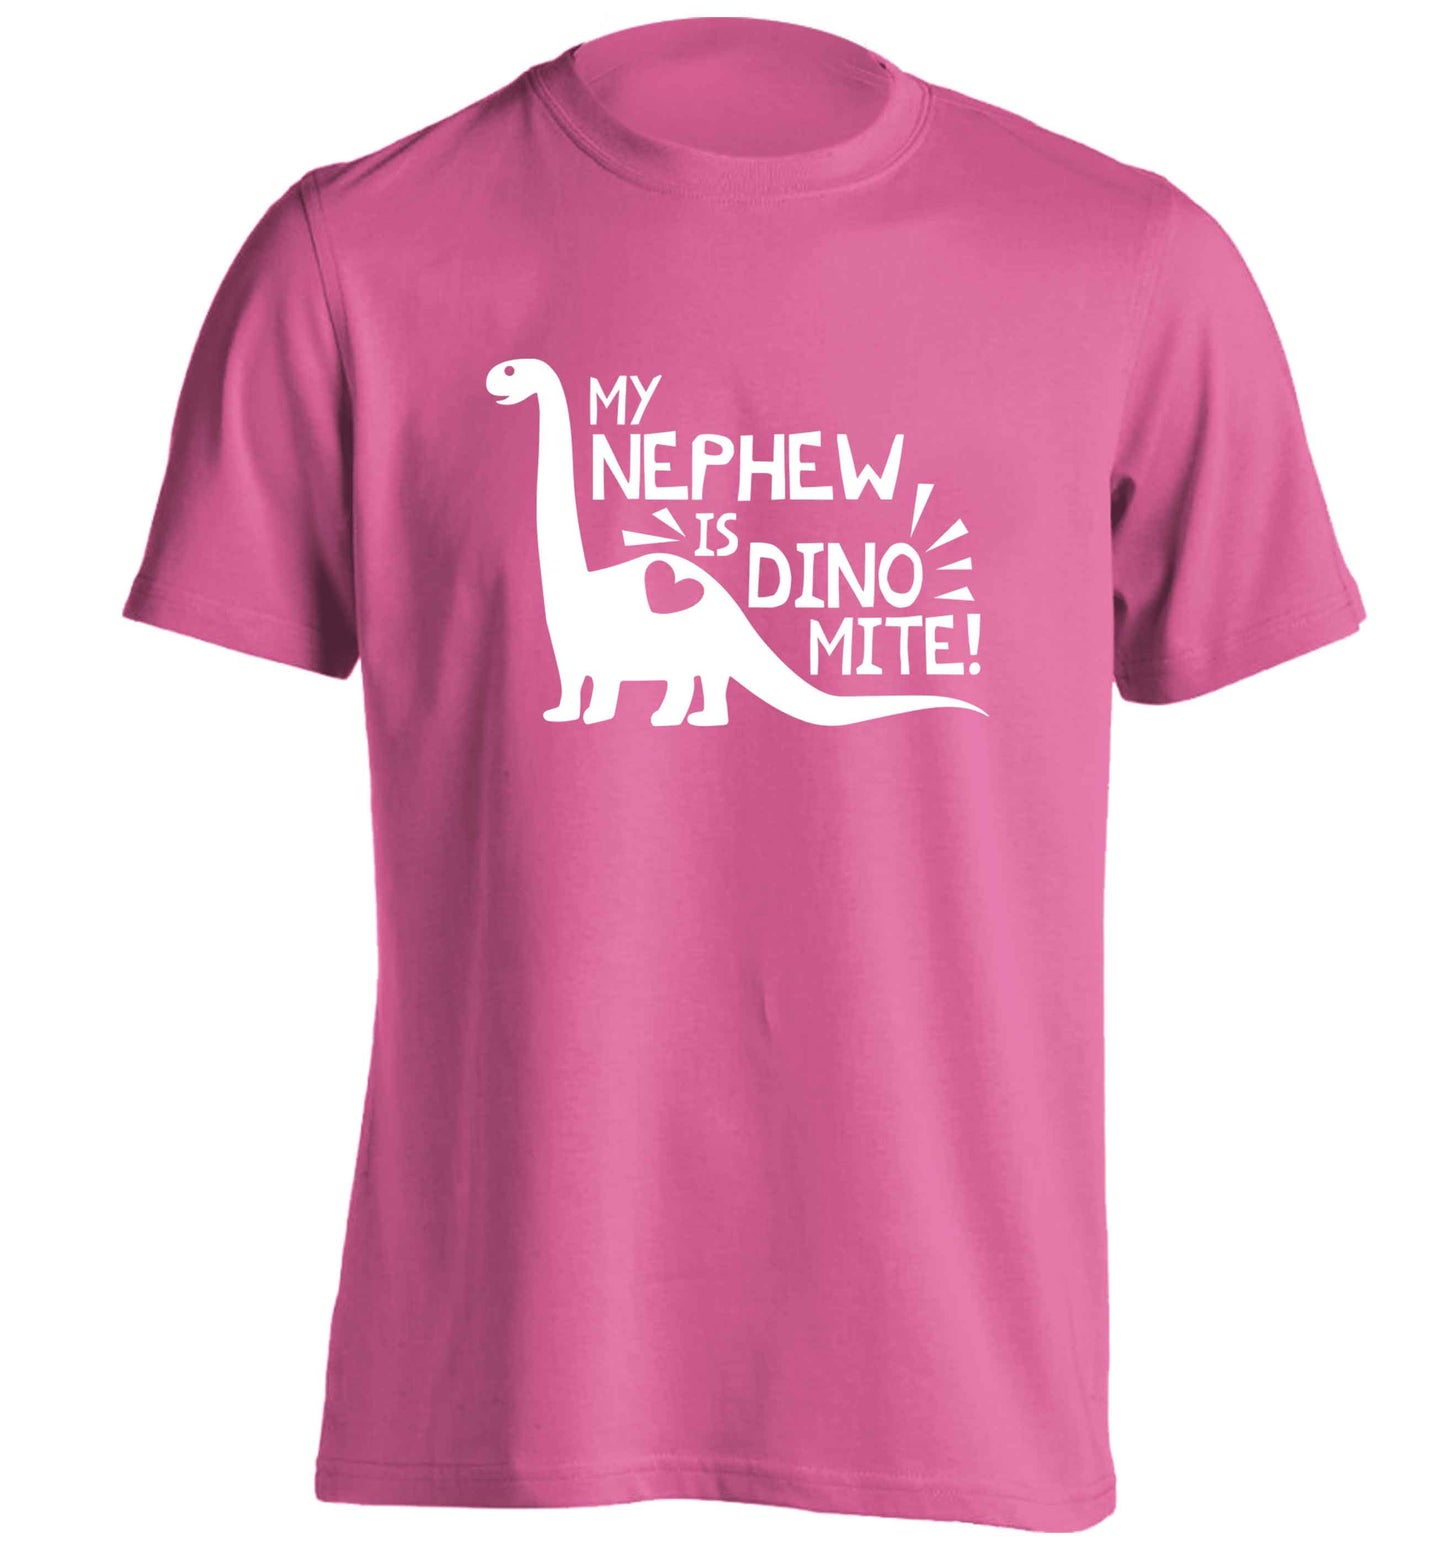 My nephew is dinomite! adults unisex pink Tshirt 2XL